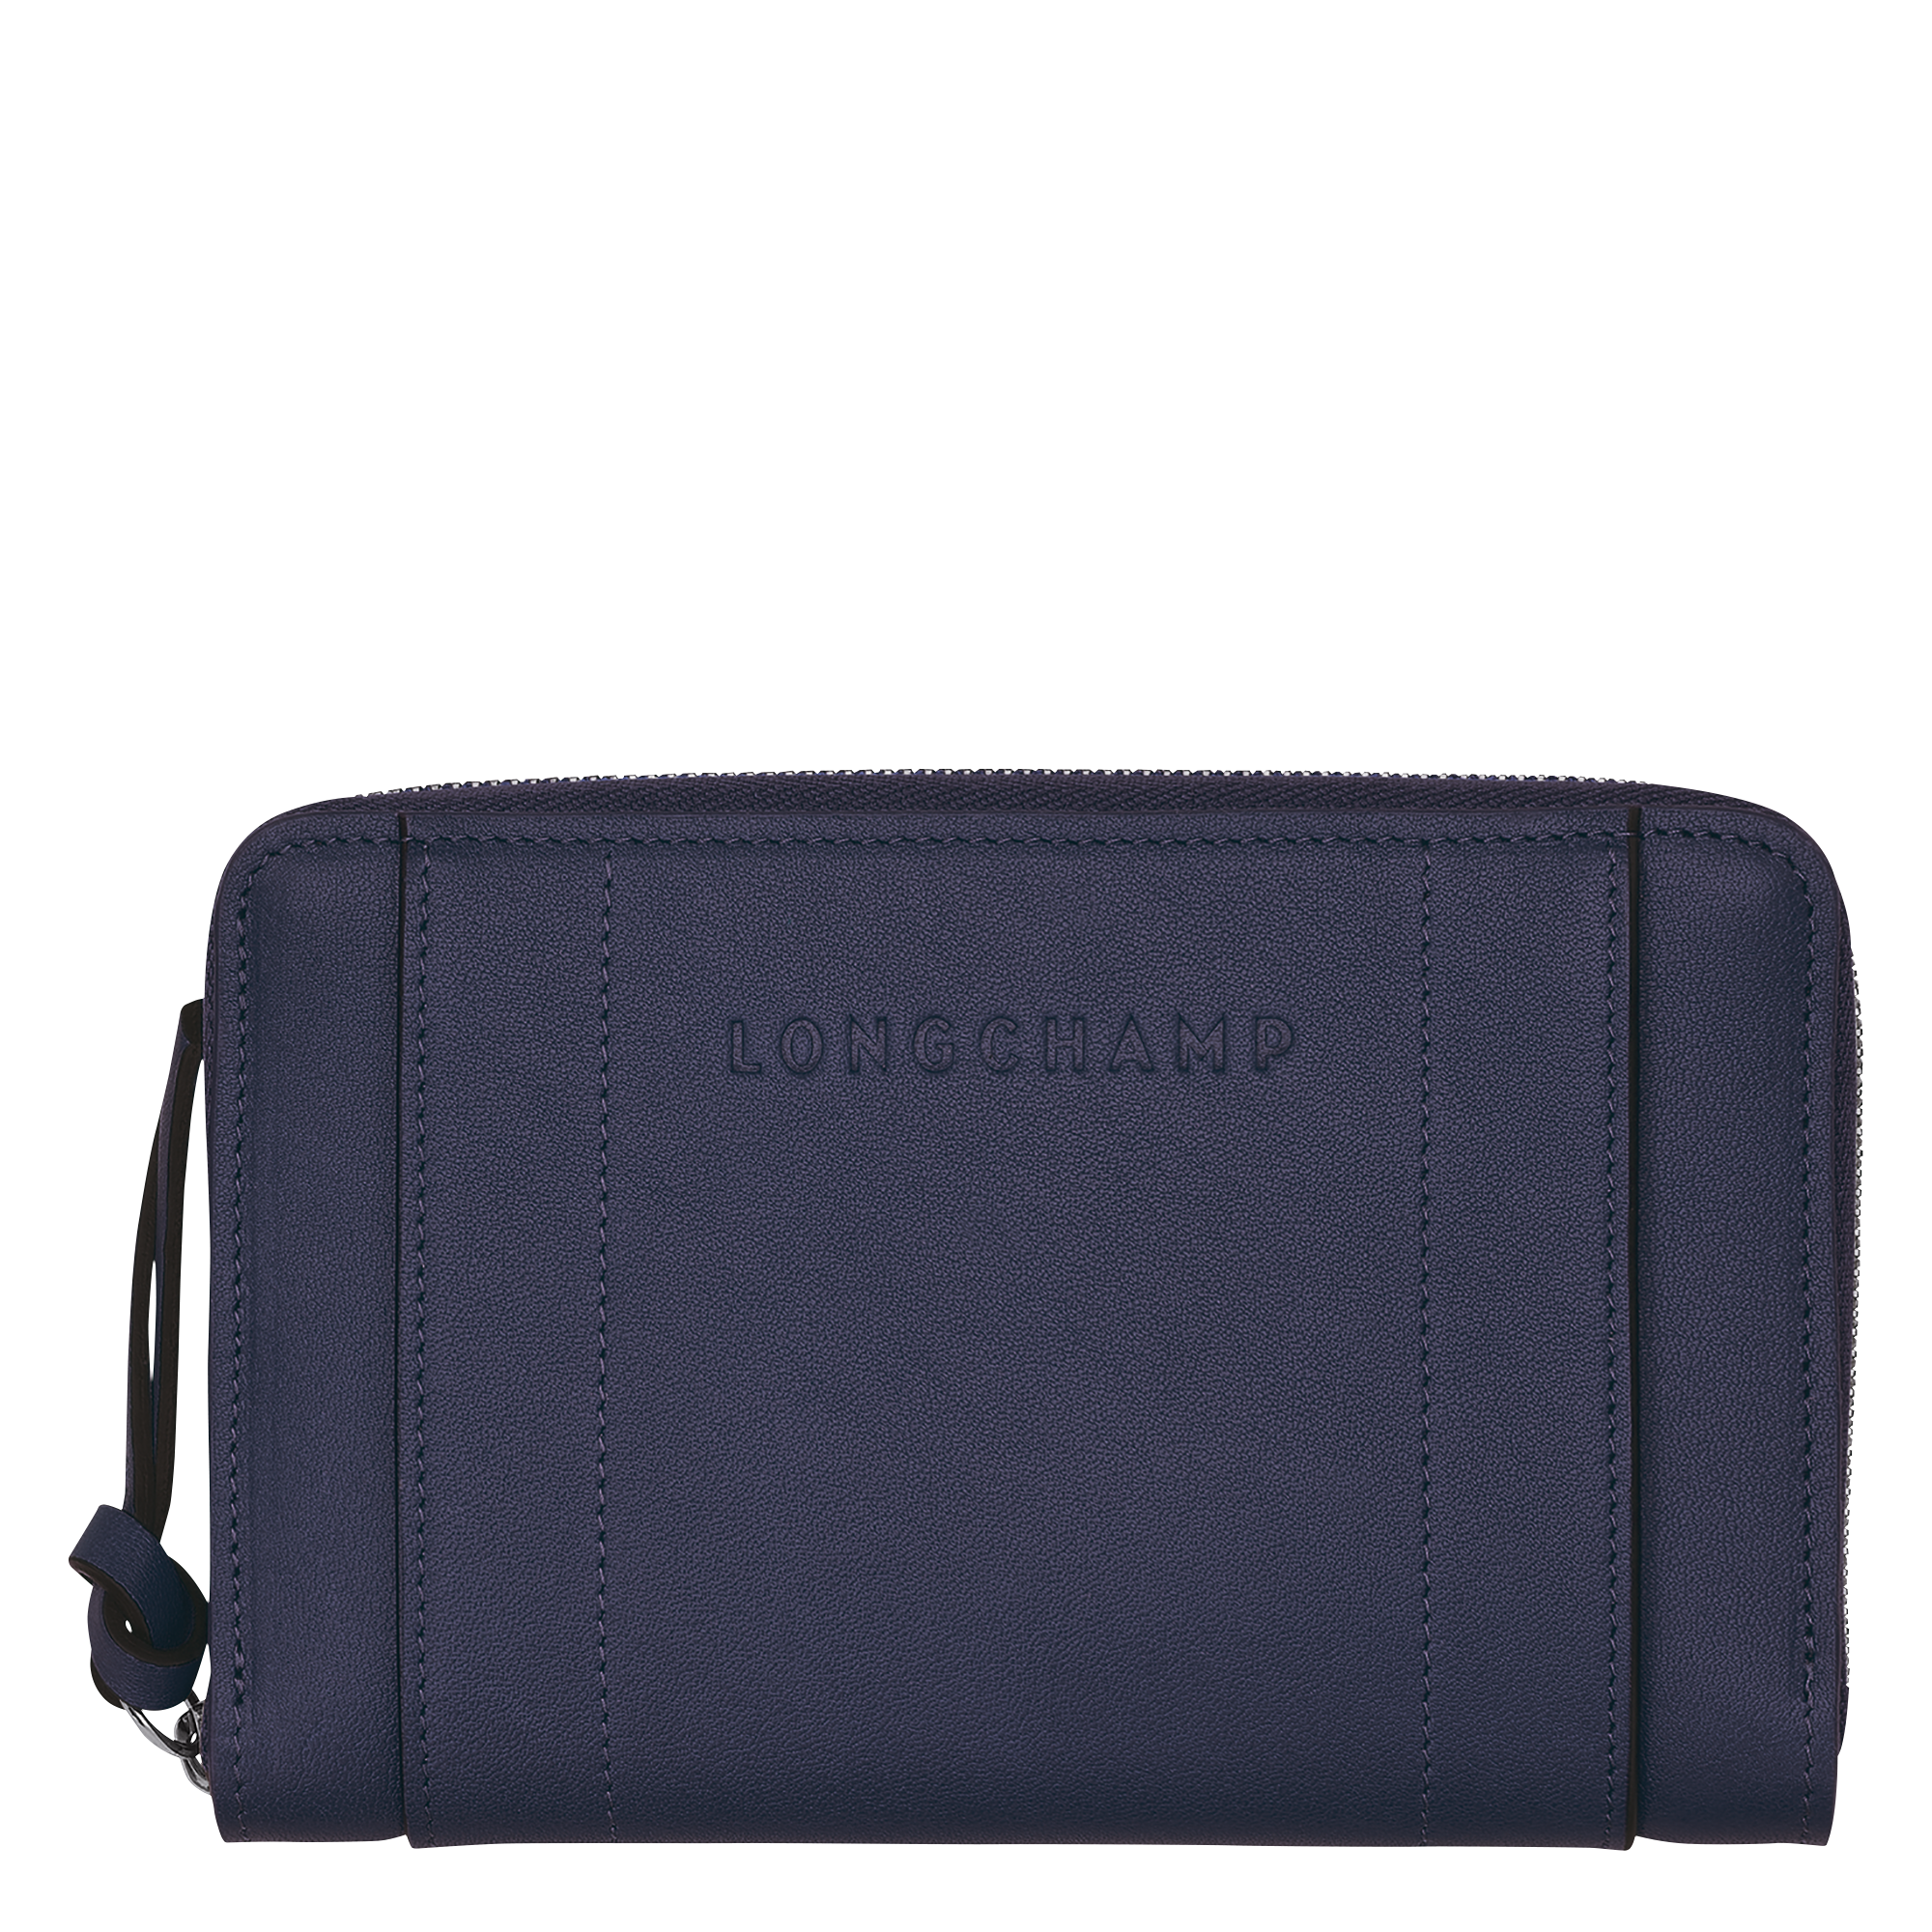 Longchamp 3D 錢包, 藍莓色